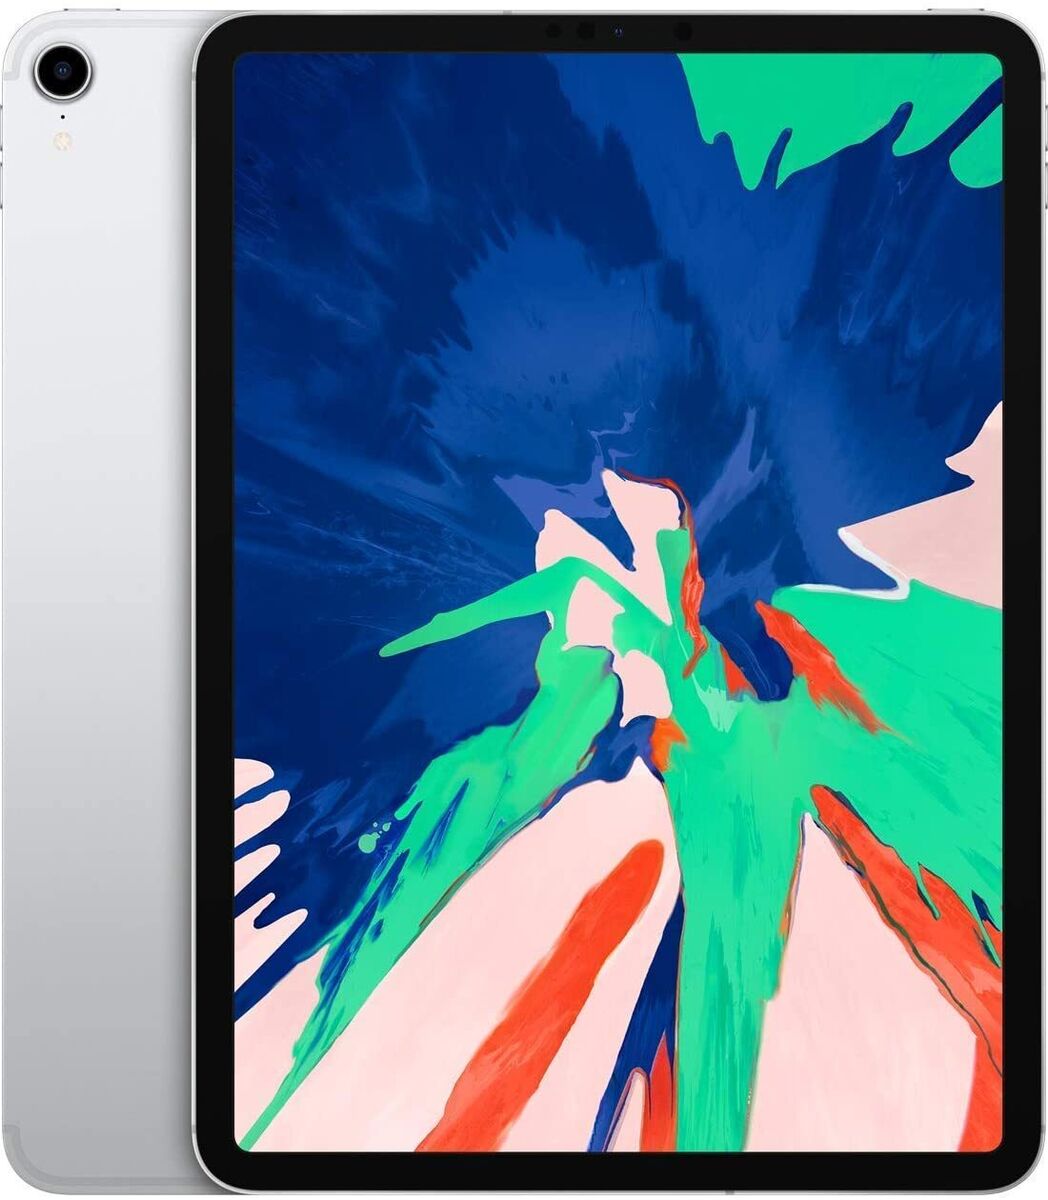 Apple iPad Pro 11-inch Wi-Fi+Cellular 256GB Space Gray | eBay